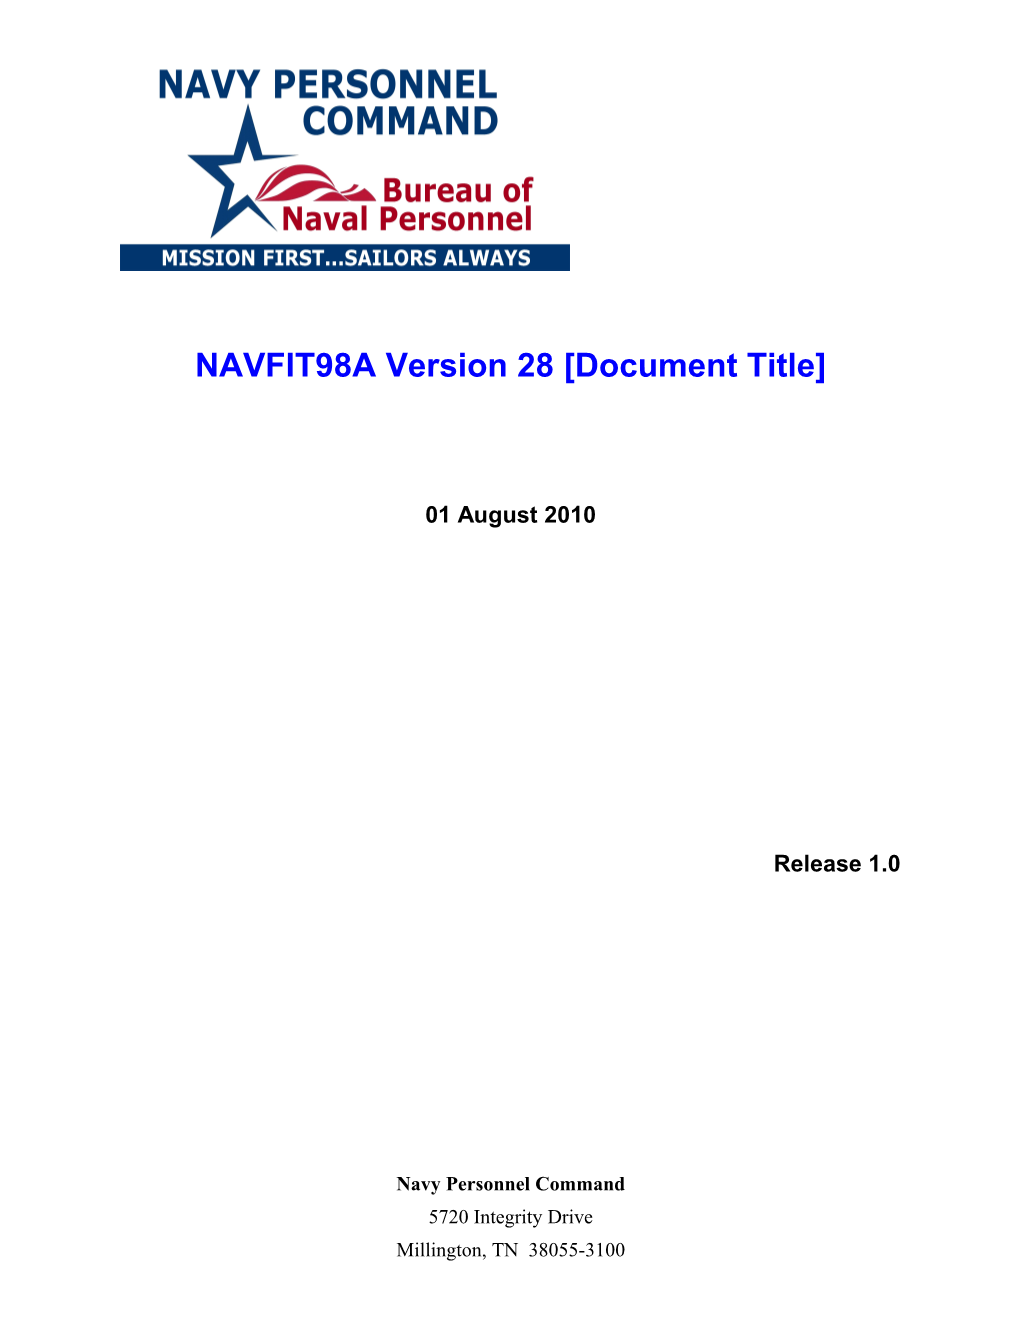 NAVFIT98A Version 28 User's Manual